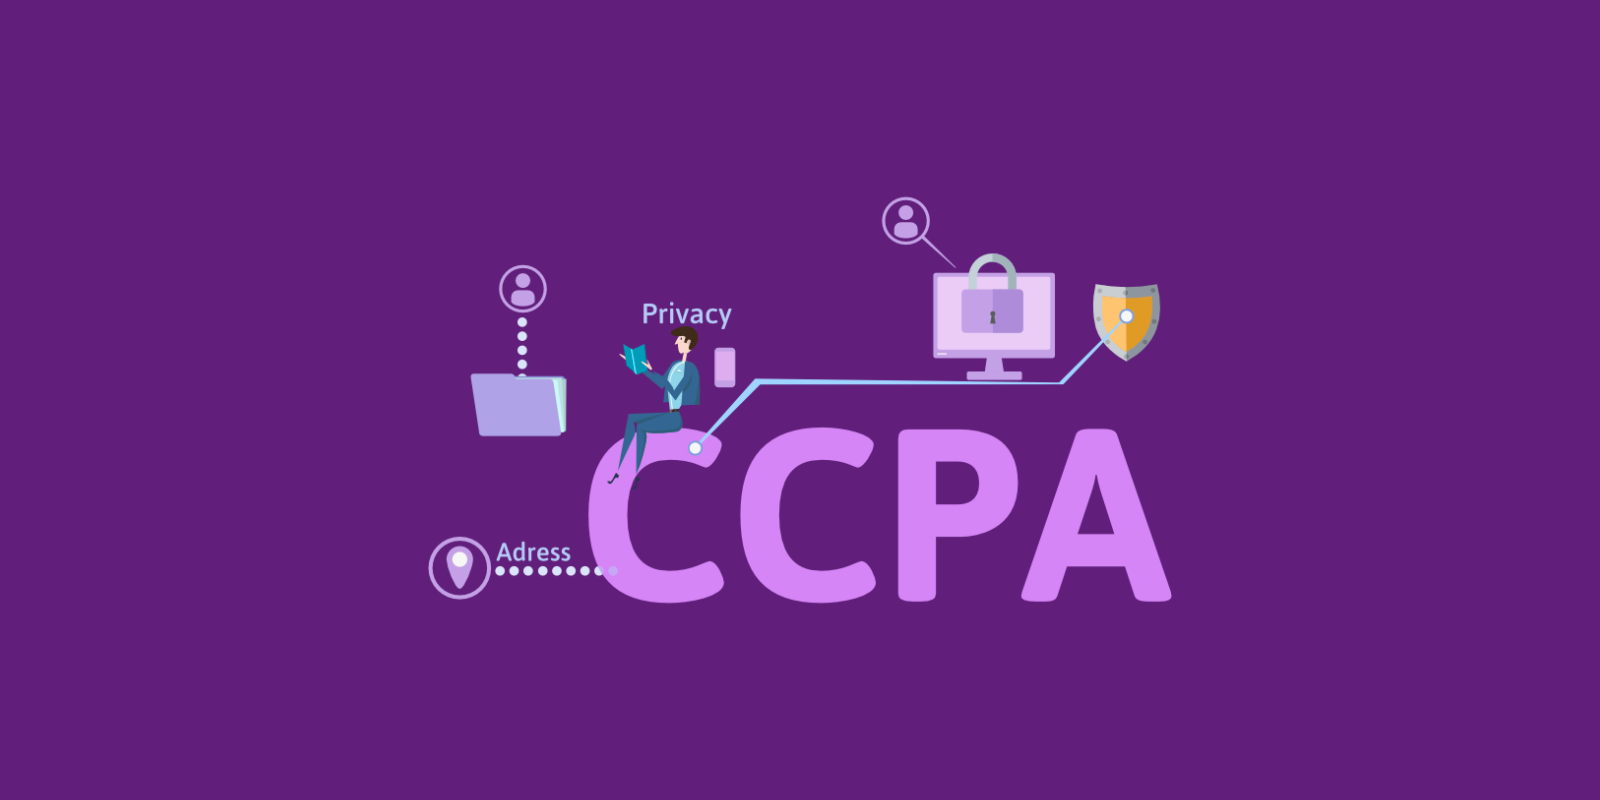 CCPA Compliance